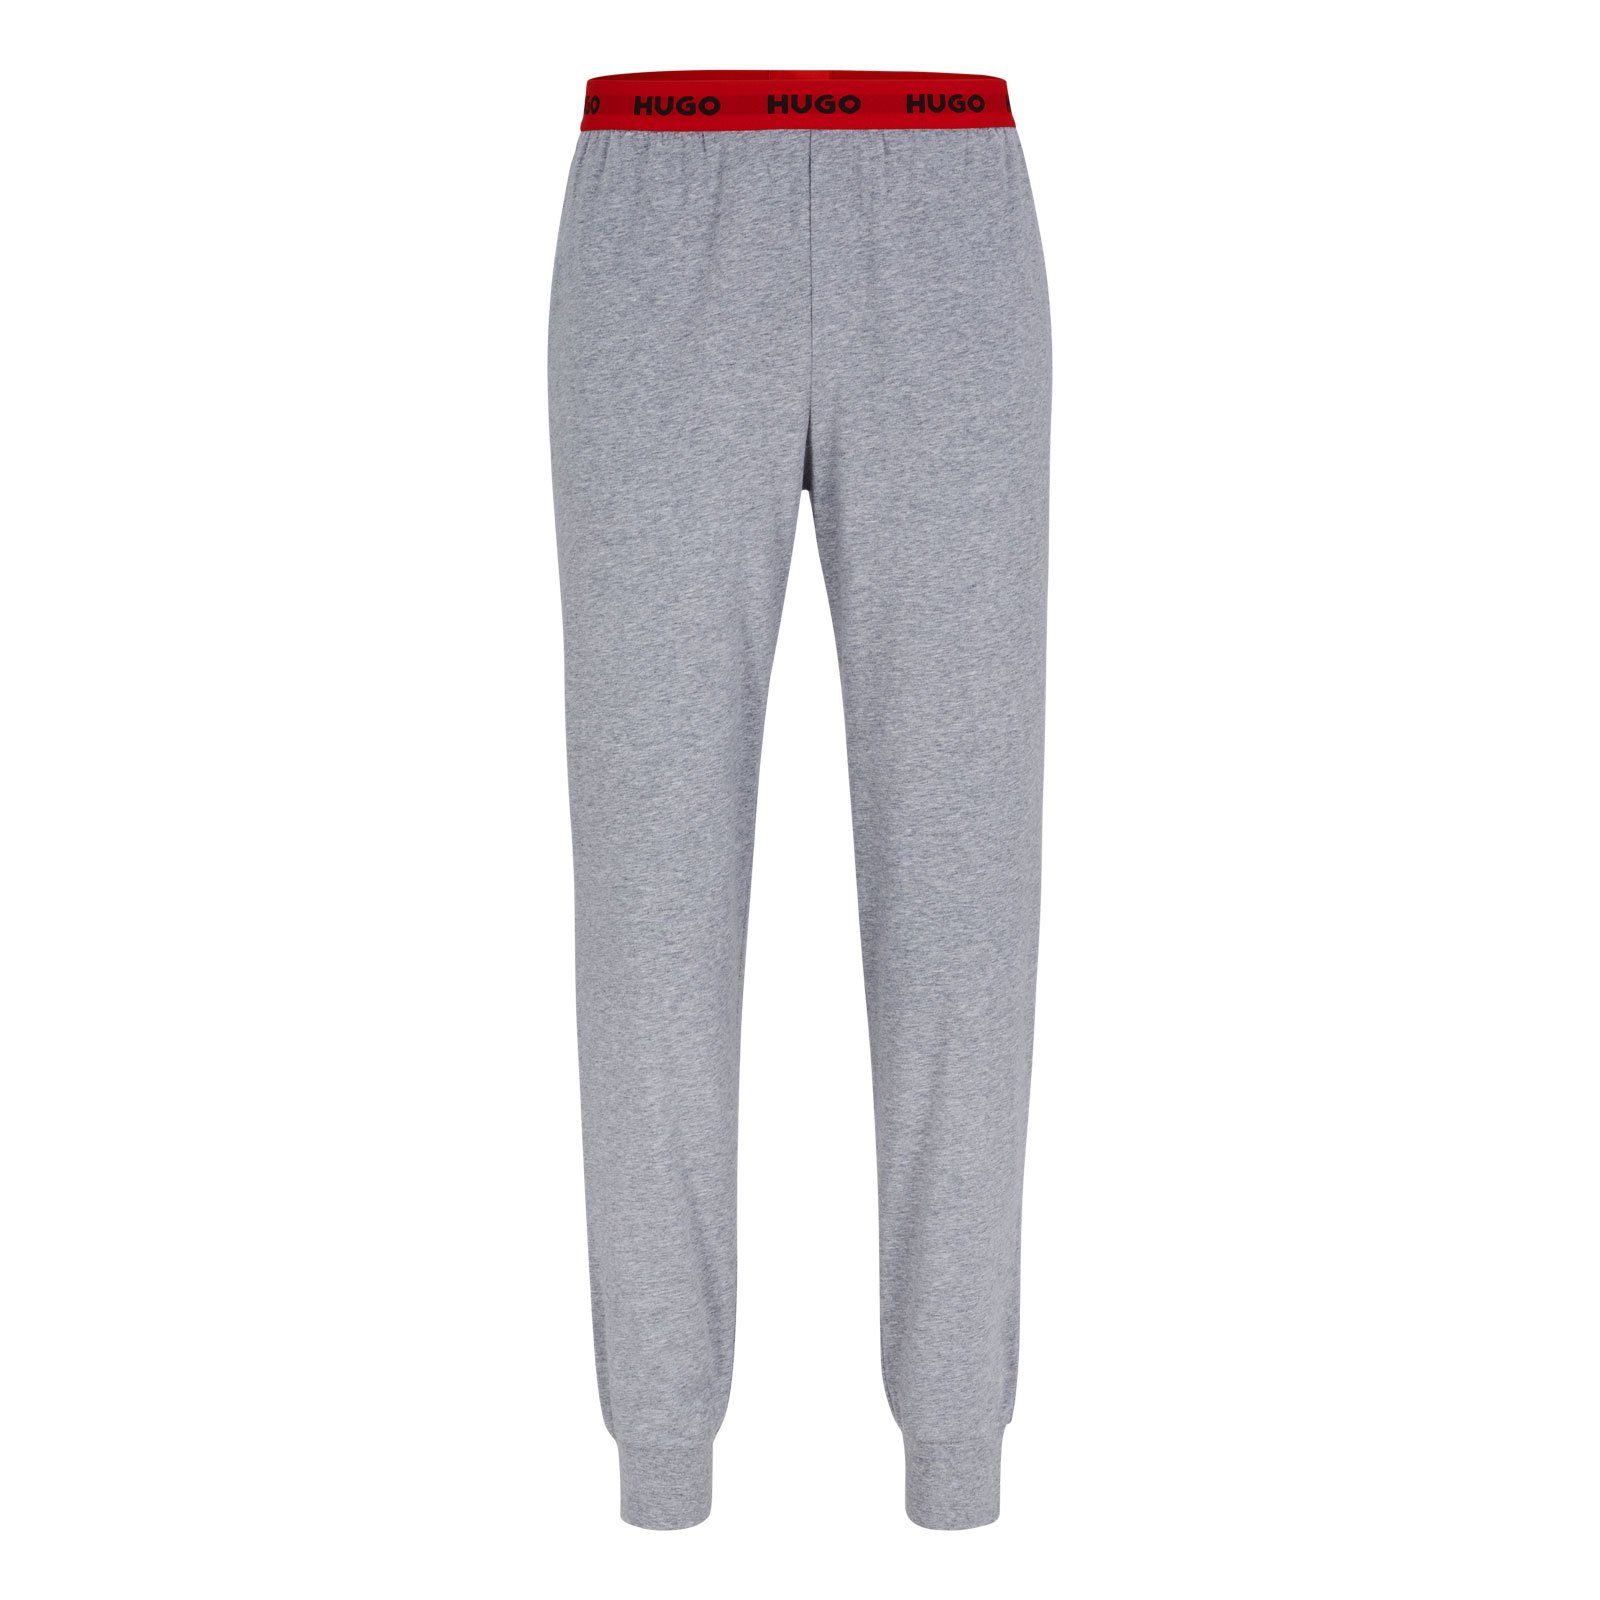 Elastikbund 035 sichtbarem medium Pyjamahose mit Linked grey HUGO Pants